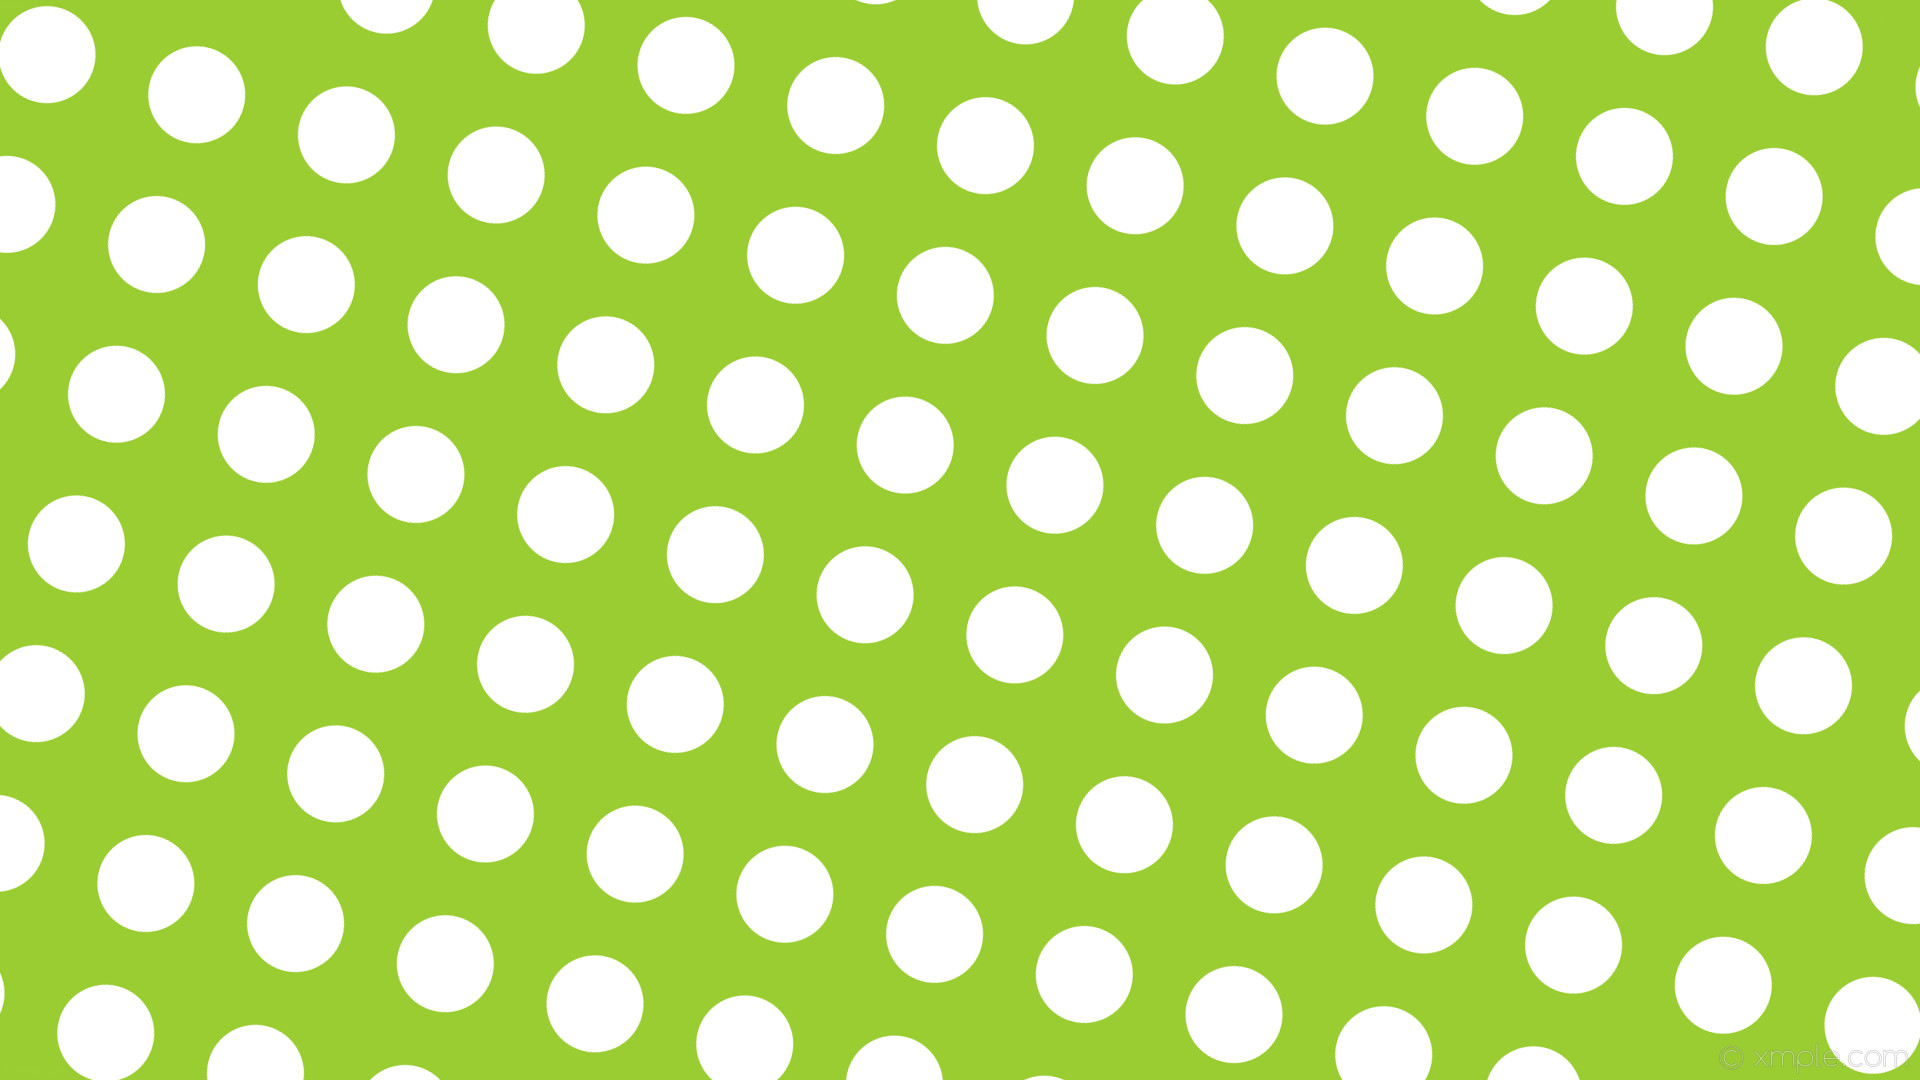 1920x1080 wallpaper green polka dots white spots yellow green #9acd32 #ffffff 165Â°  97px 155px